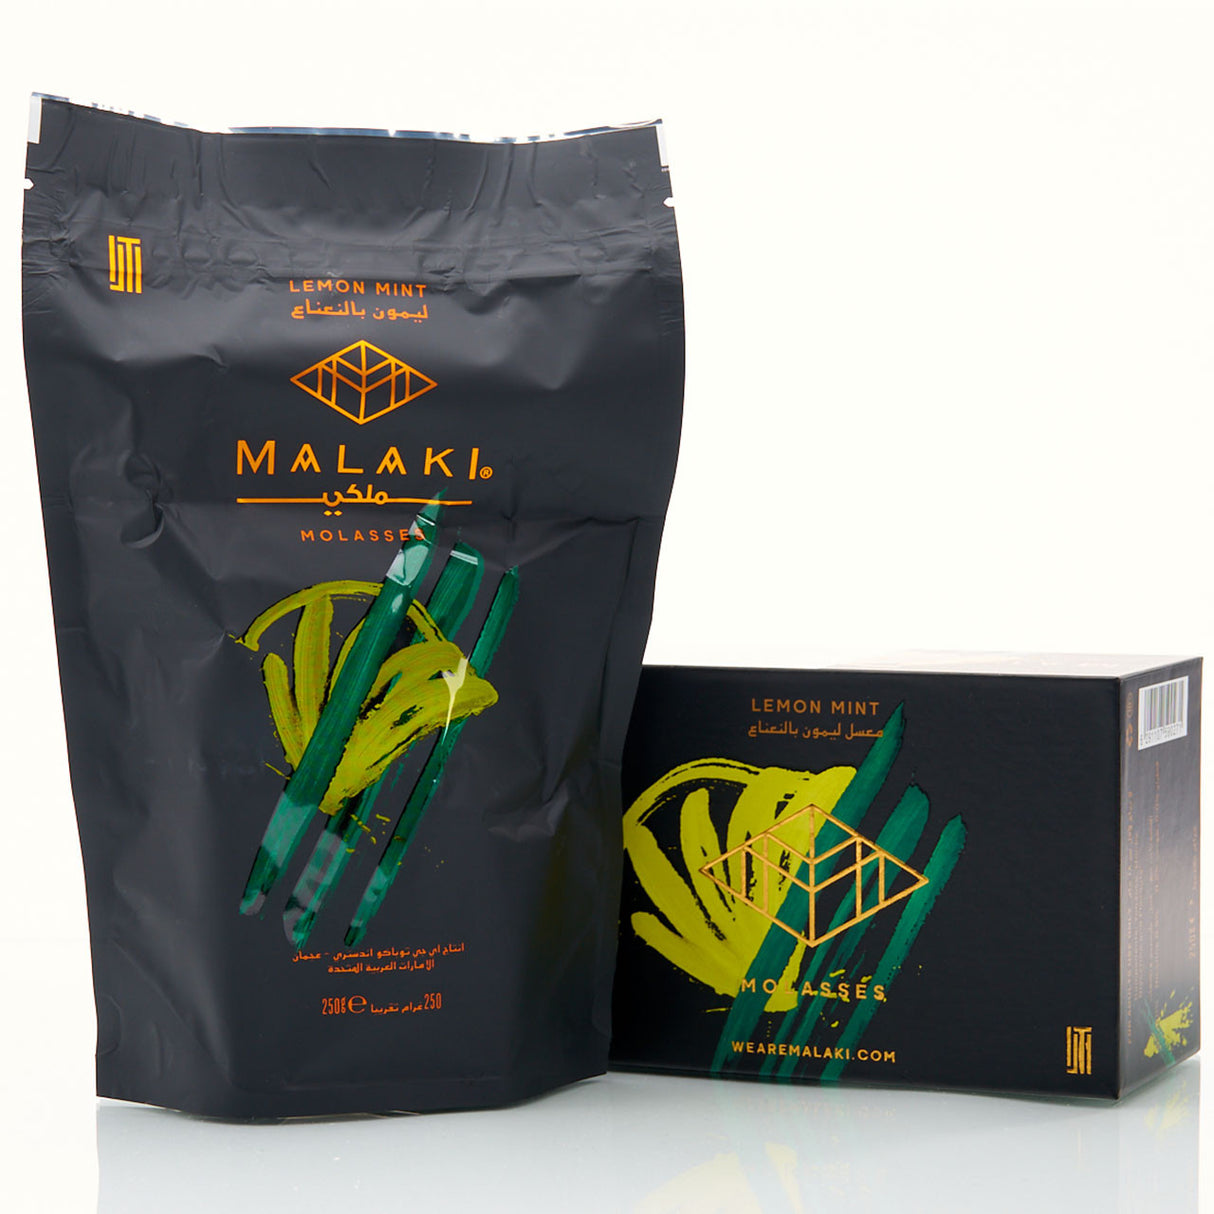 Malaki Molasses Hookah Shisha Premium Handcrafted Tobacco Lemon Mint Flavor